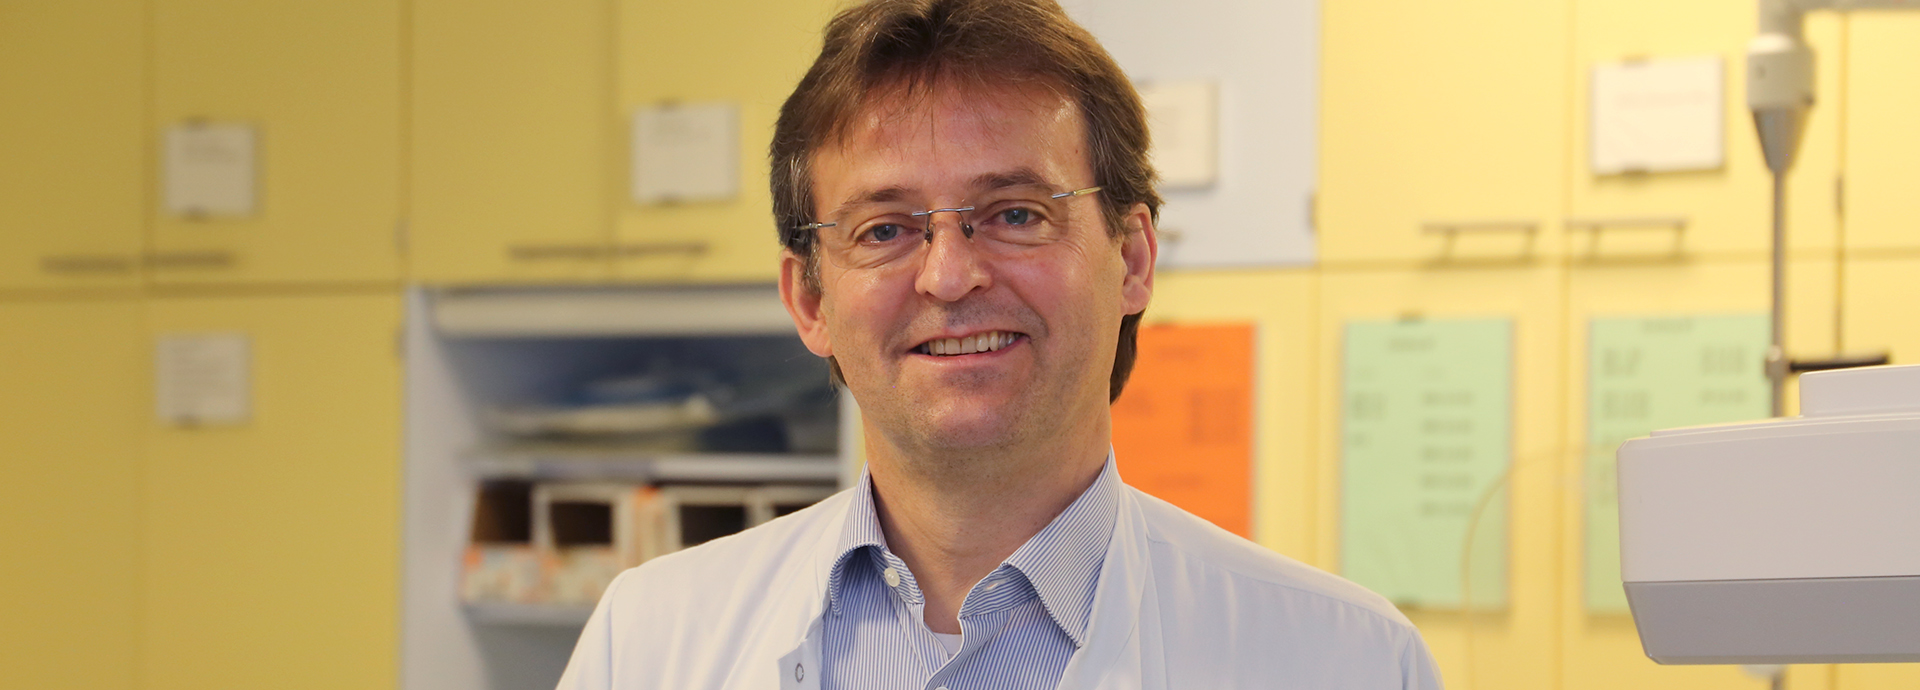 Professor Dr. med. Martin Brück